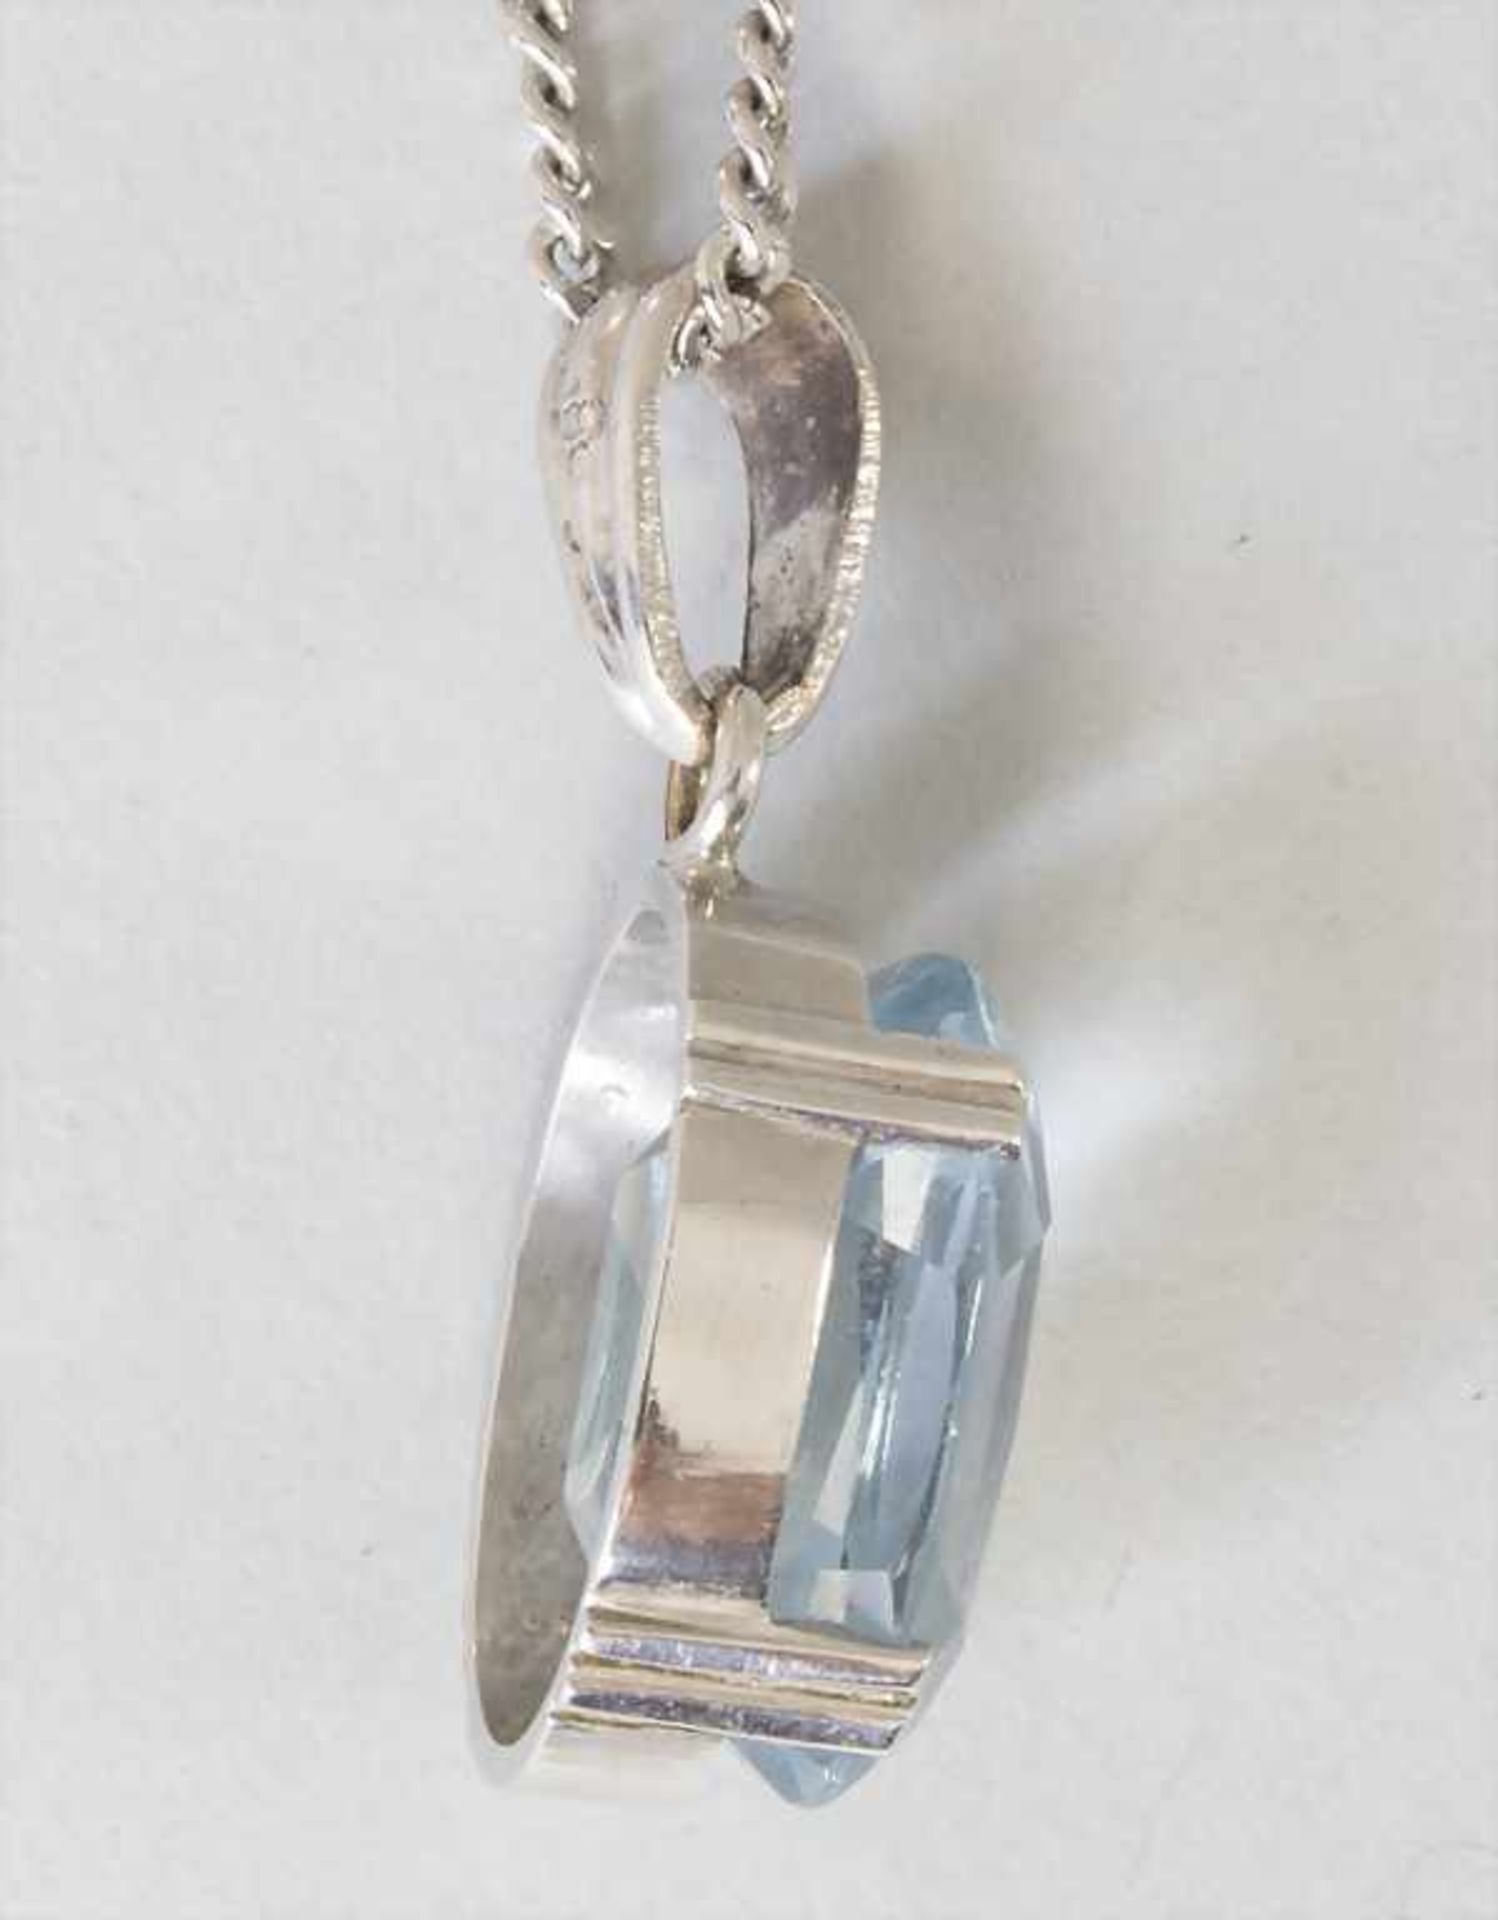 Goldkette mit Aquamarinanhänger / A gold necklace with aquamarin pendant - Bild 3 aus 4